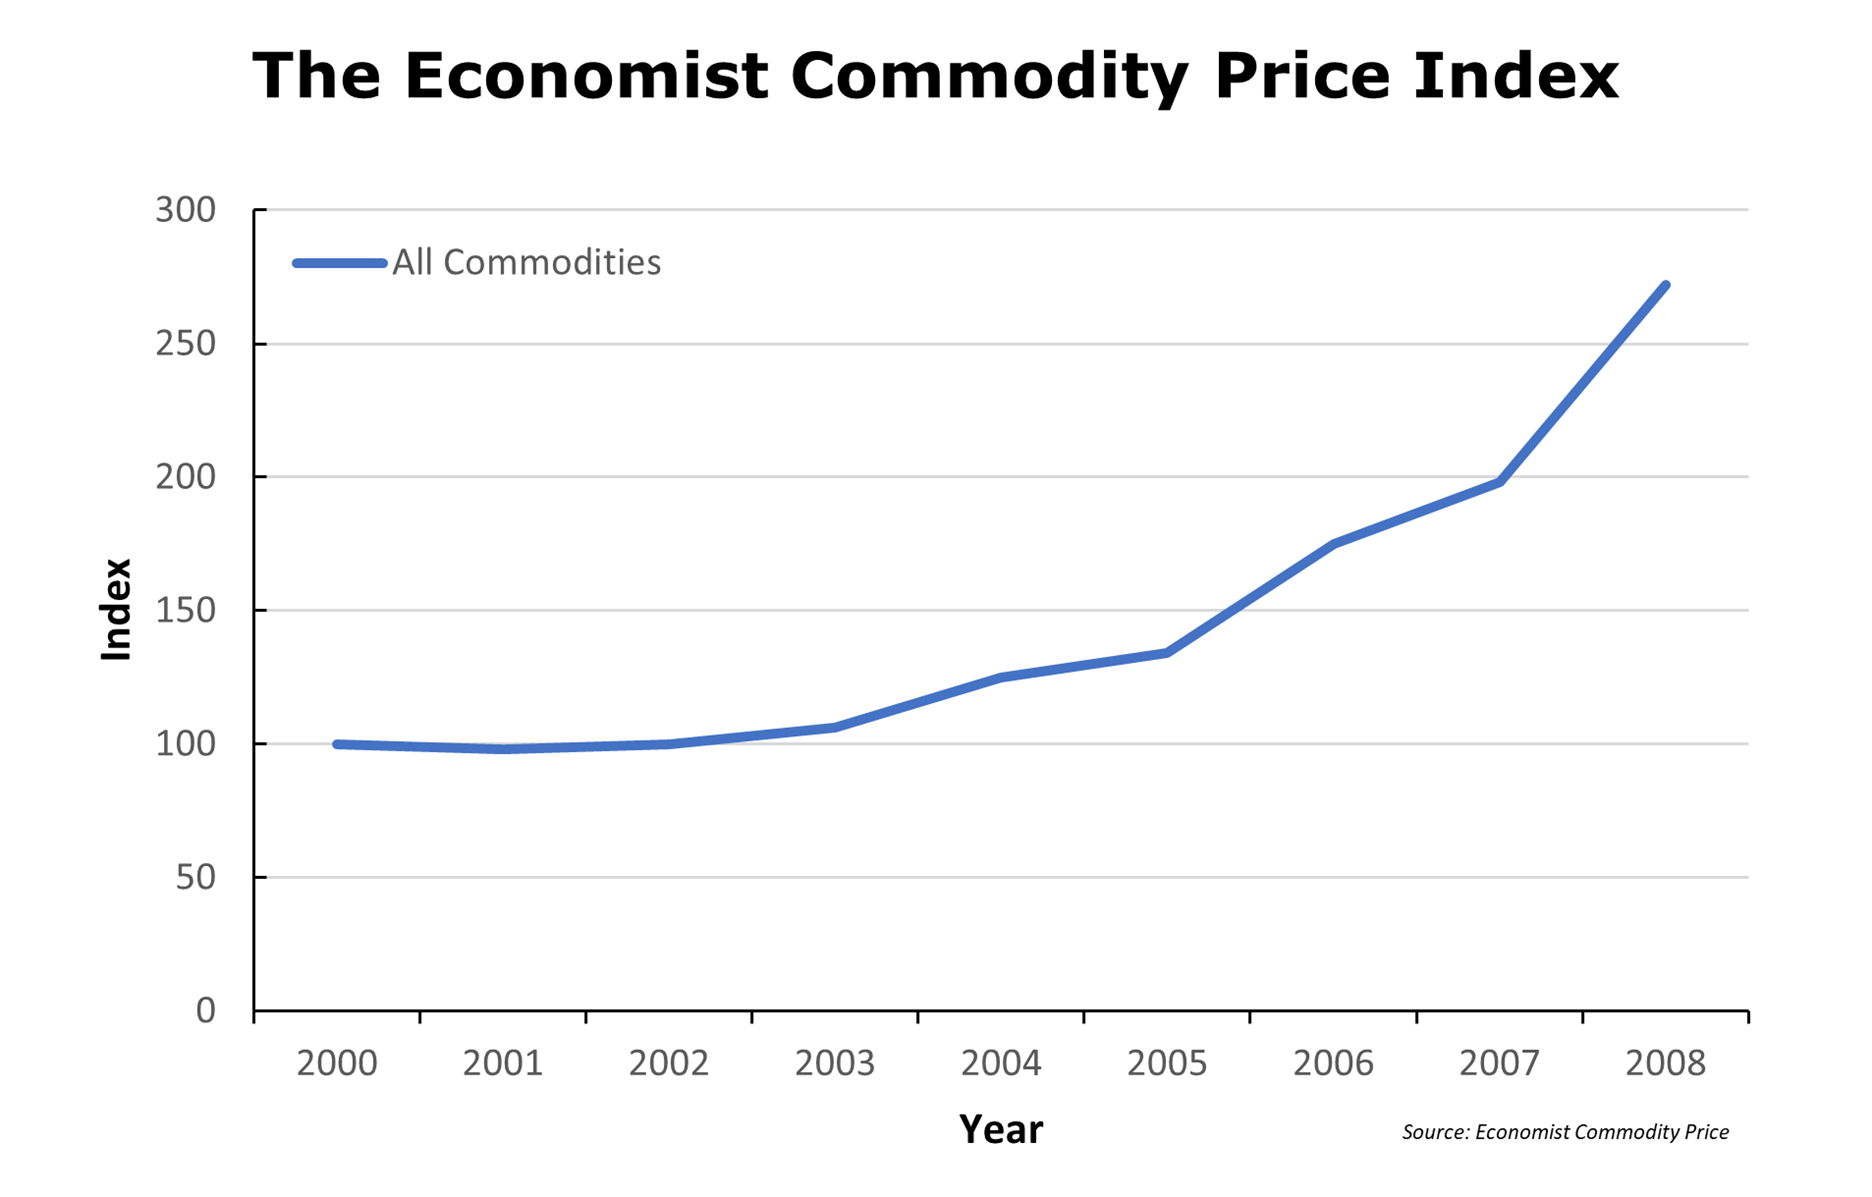 Graph of The Economist Commodity Price Index